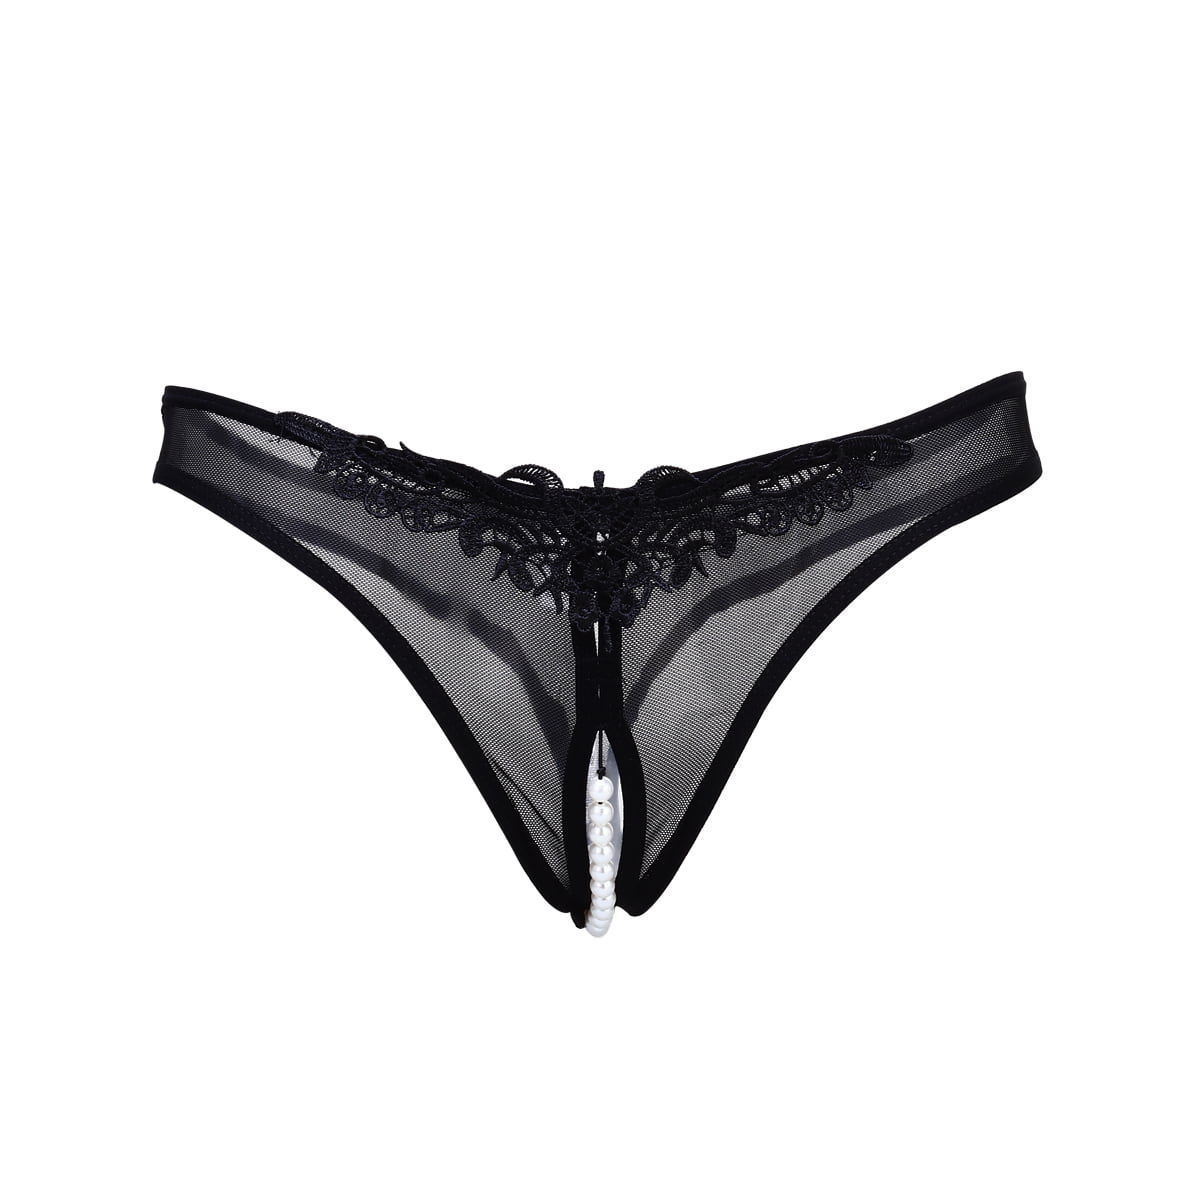 Etereauty Pearl Open Crotch Mesh Briefs Erotic Lingerie Sex Underwear for Women (Black) pic pic